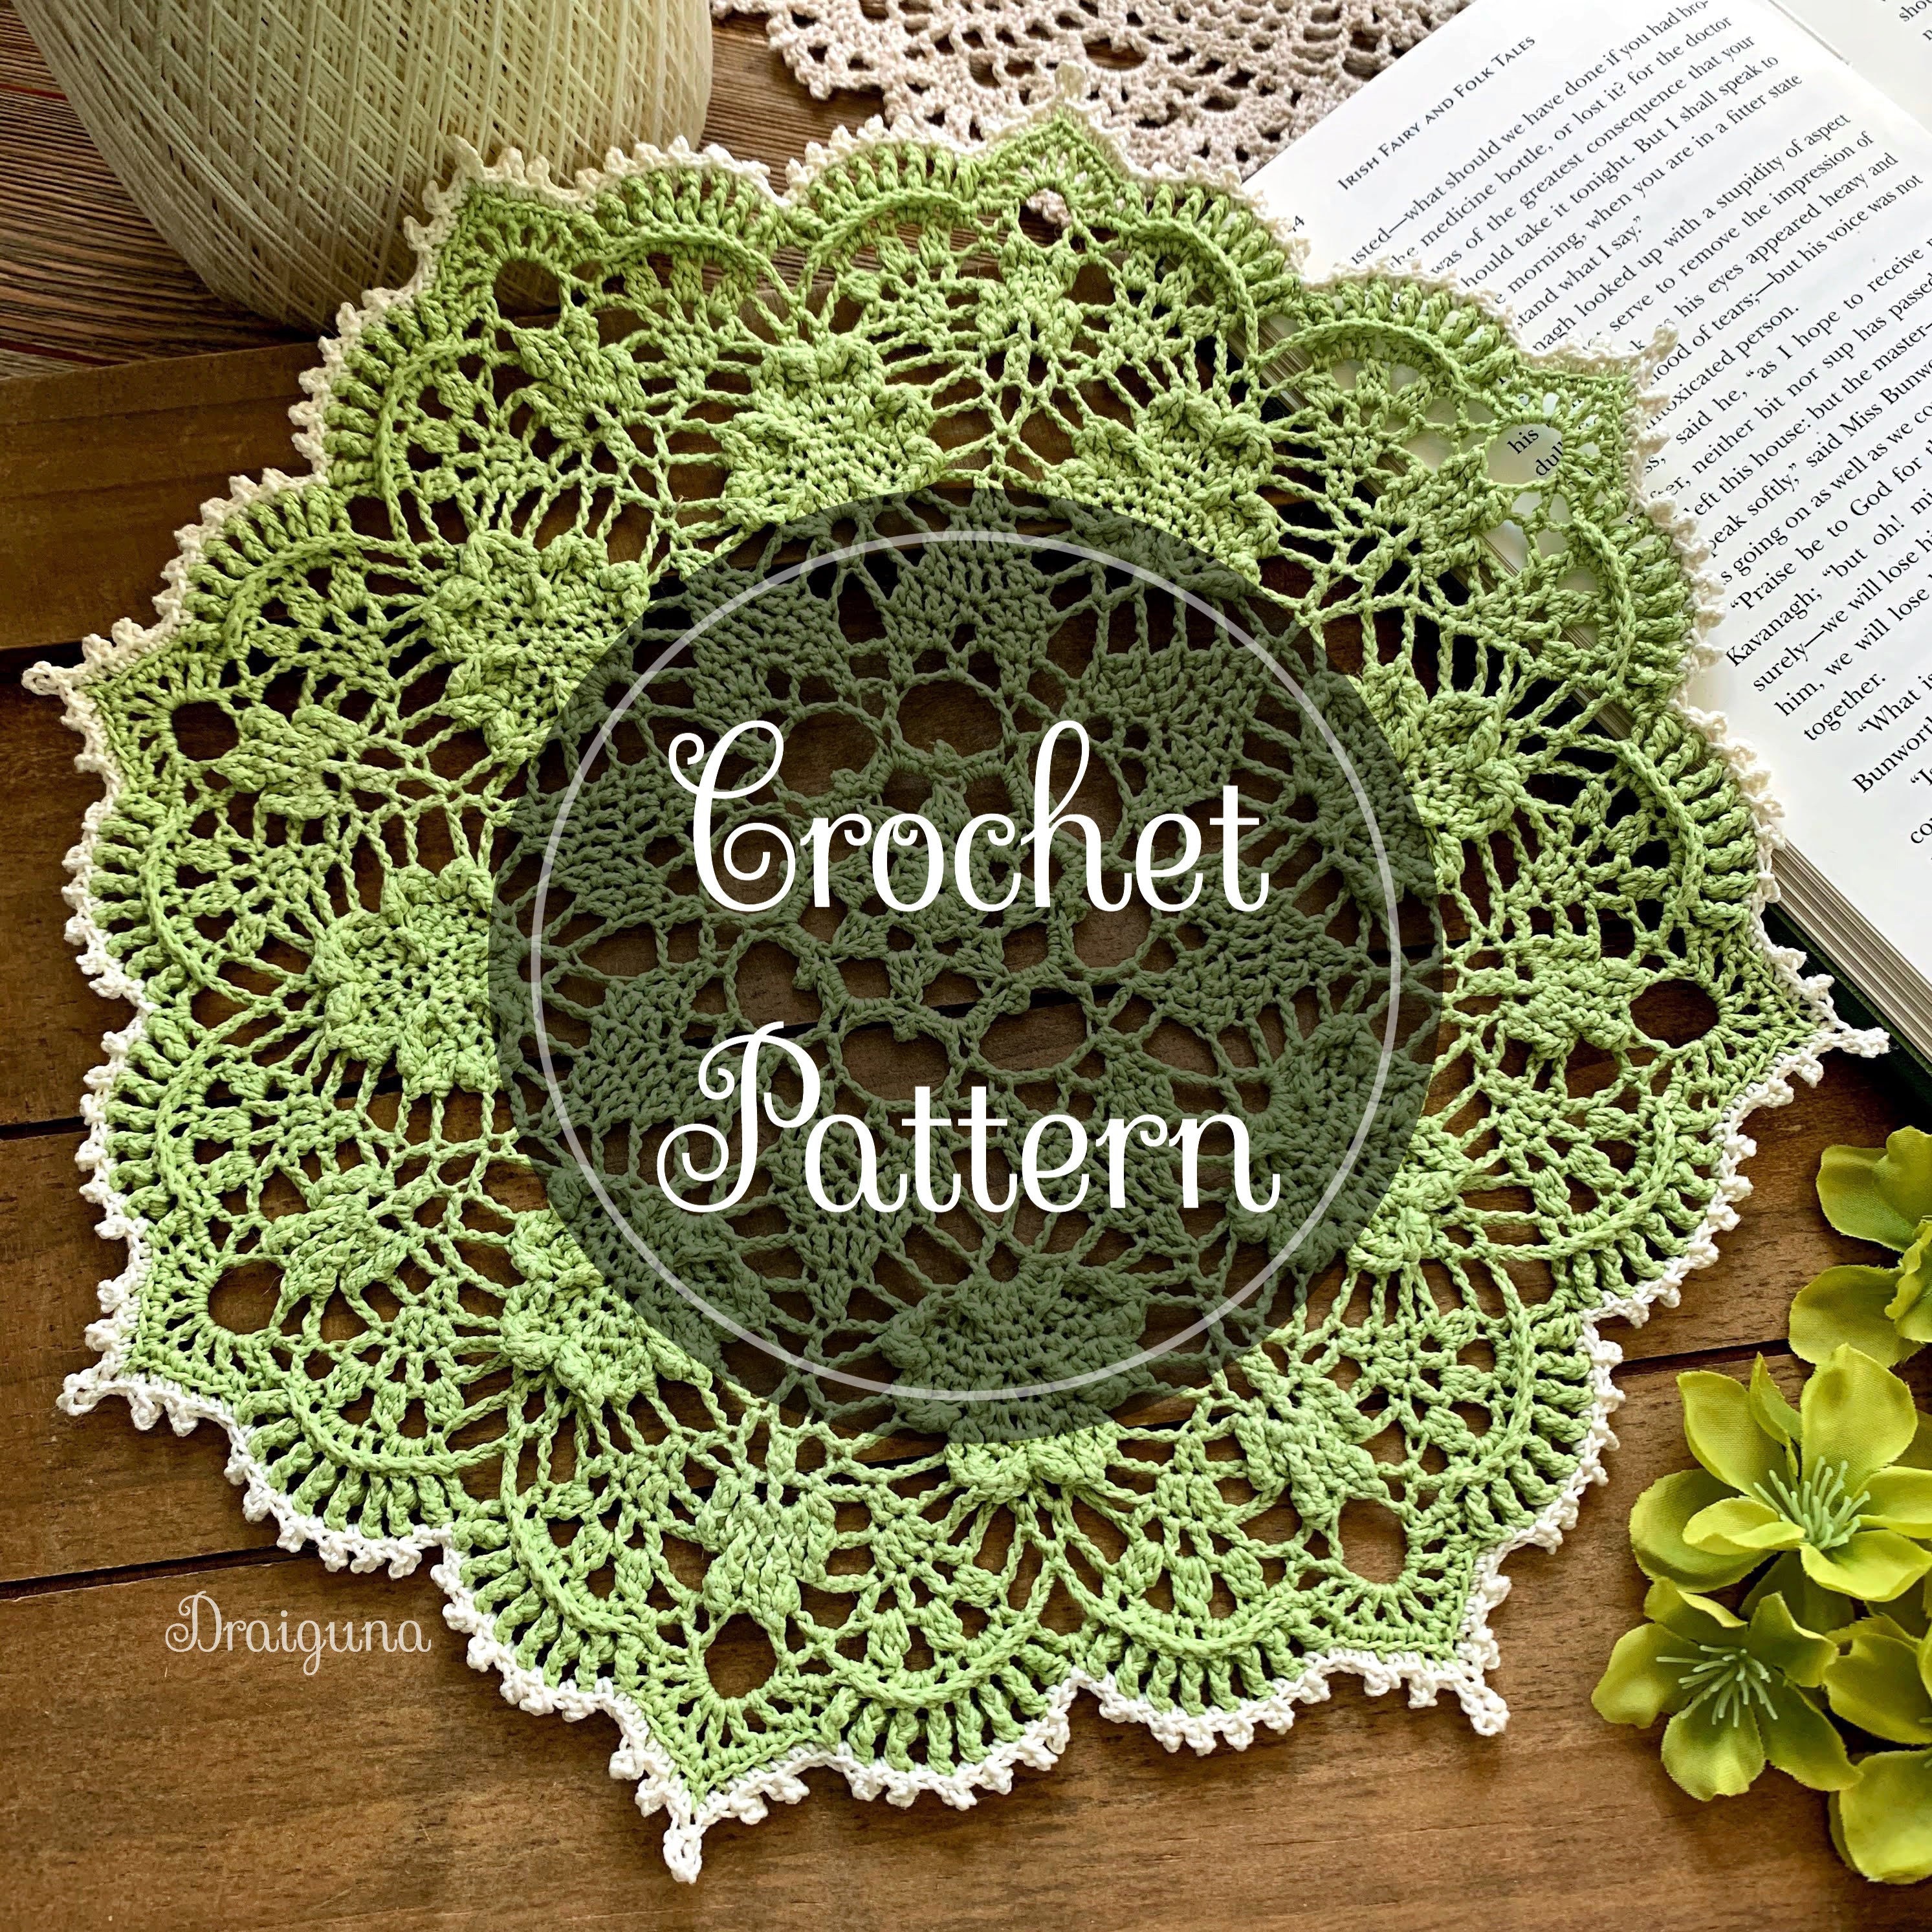 100 Mini Motifs JAPANESE Crochet Patterns Book Ebook Crochet Book PDF Crochet  Pattern, PDF Pattern Crochet Flower Pattern 